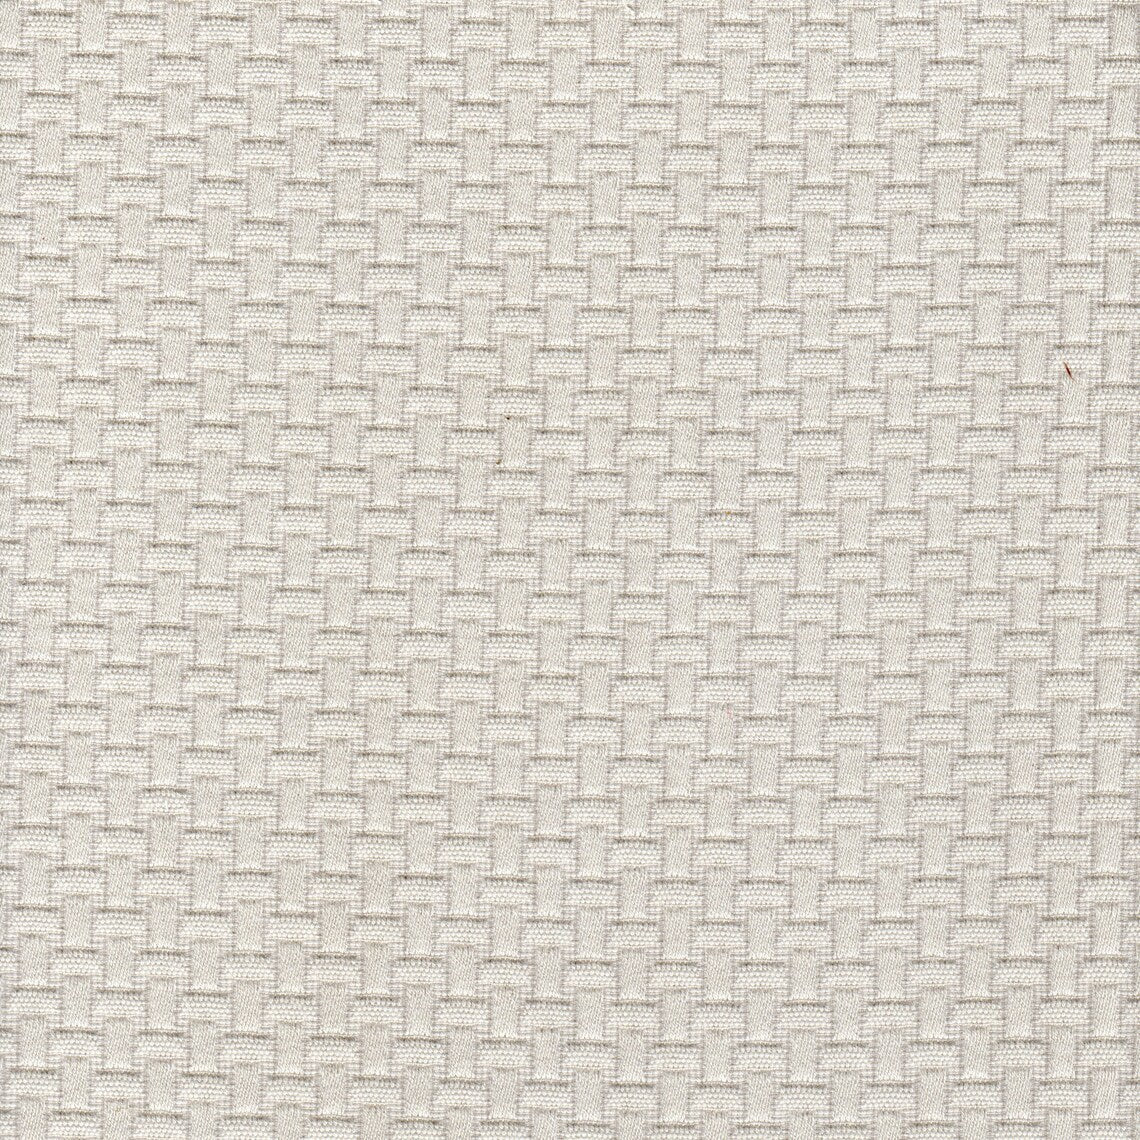 Tab Top Curtain Panels Pair in Basketry Linen Beige Basket Weave Matelasse - Small Scale